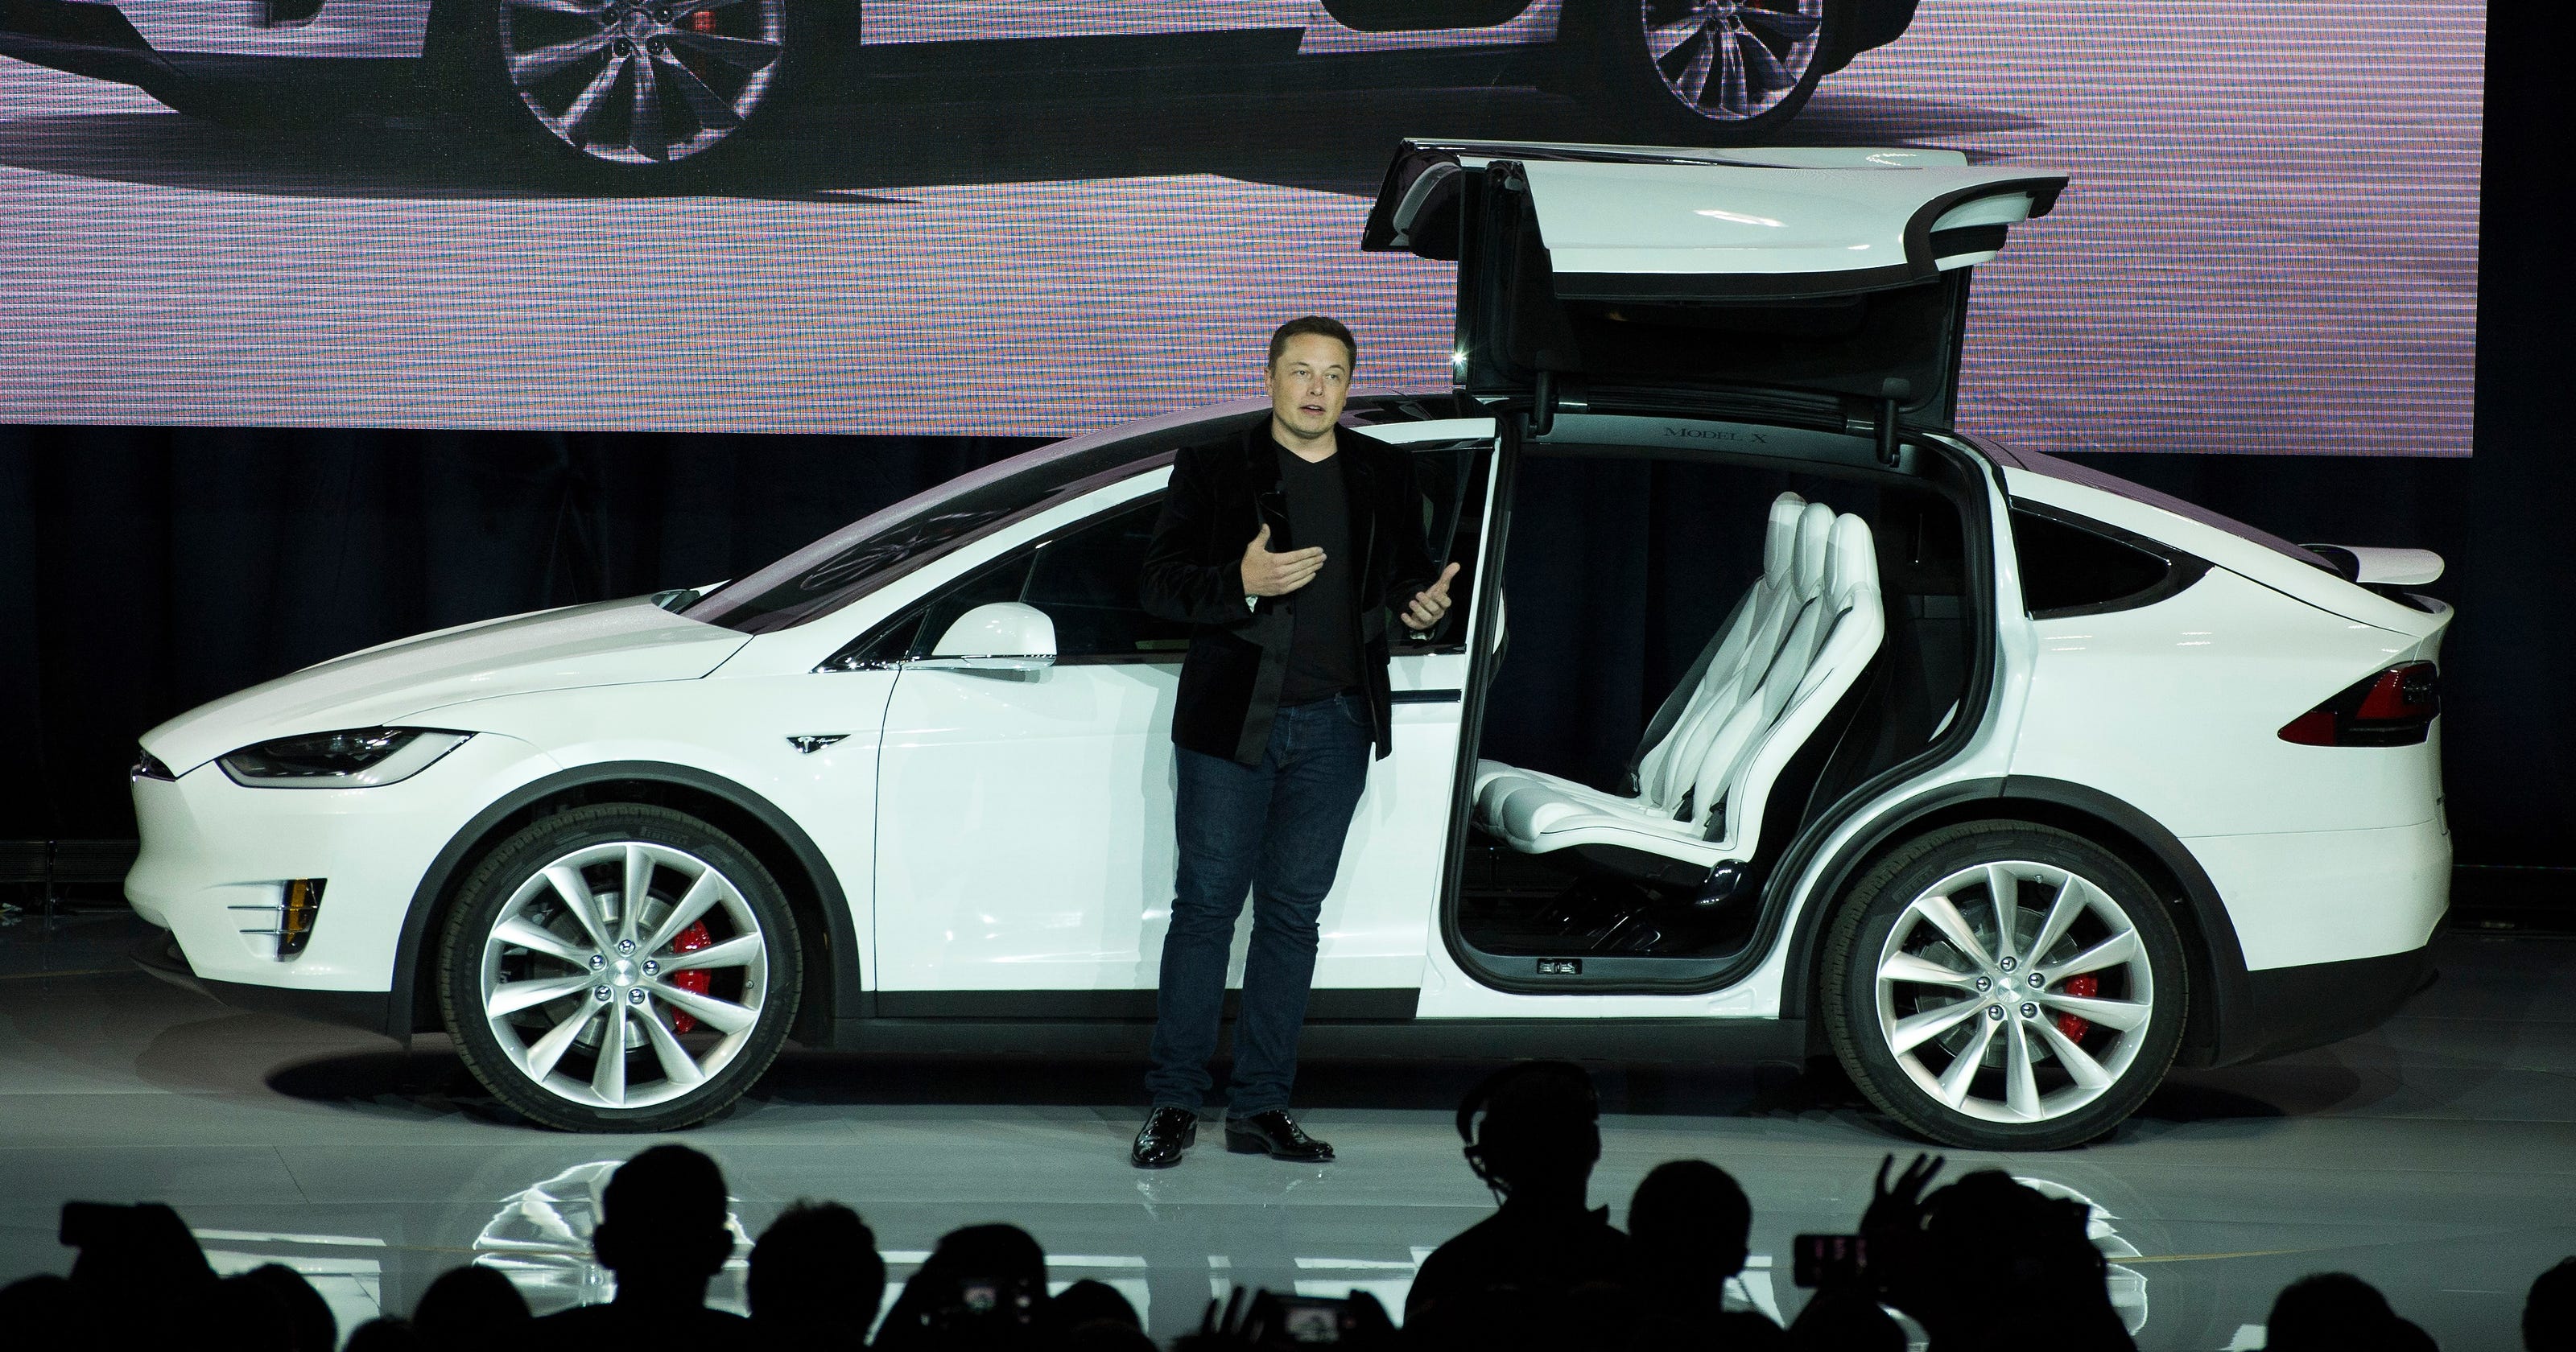 Tesla prices novel Model X SUV at $80,000